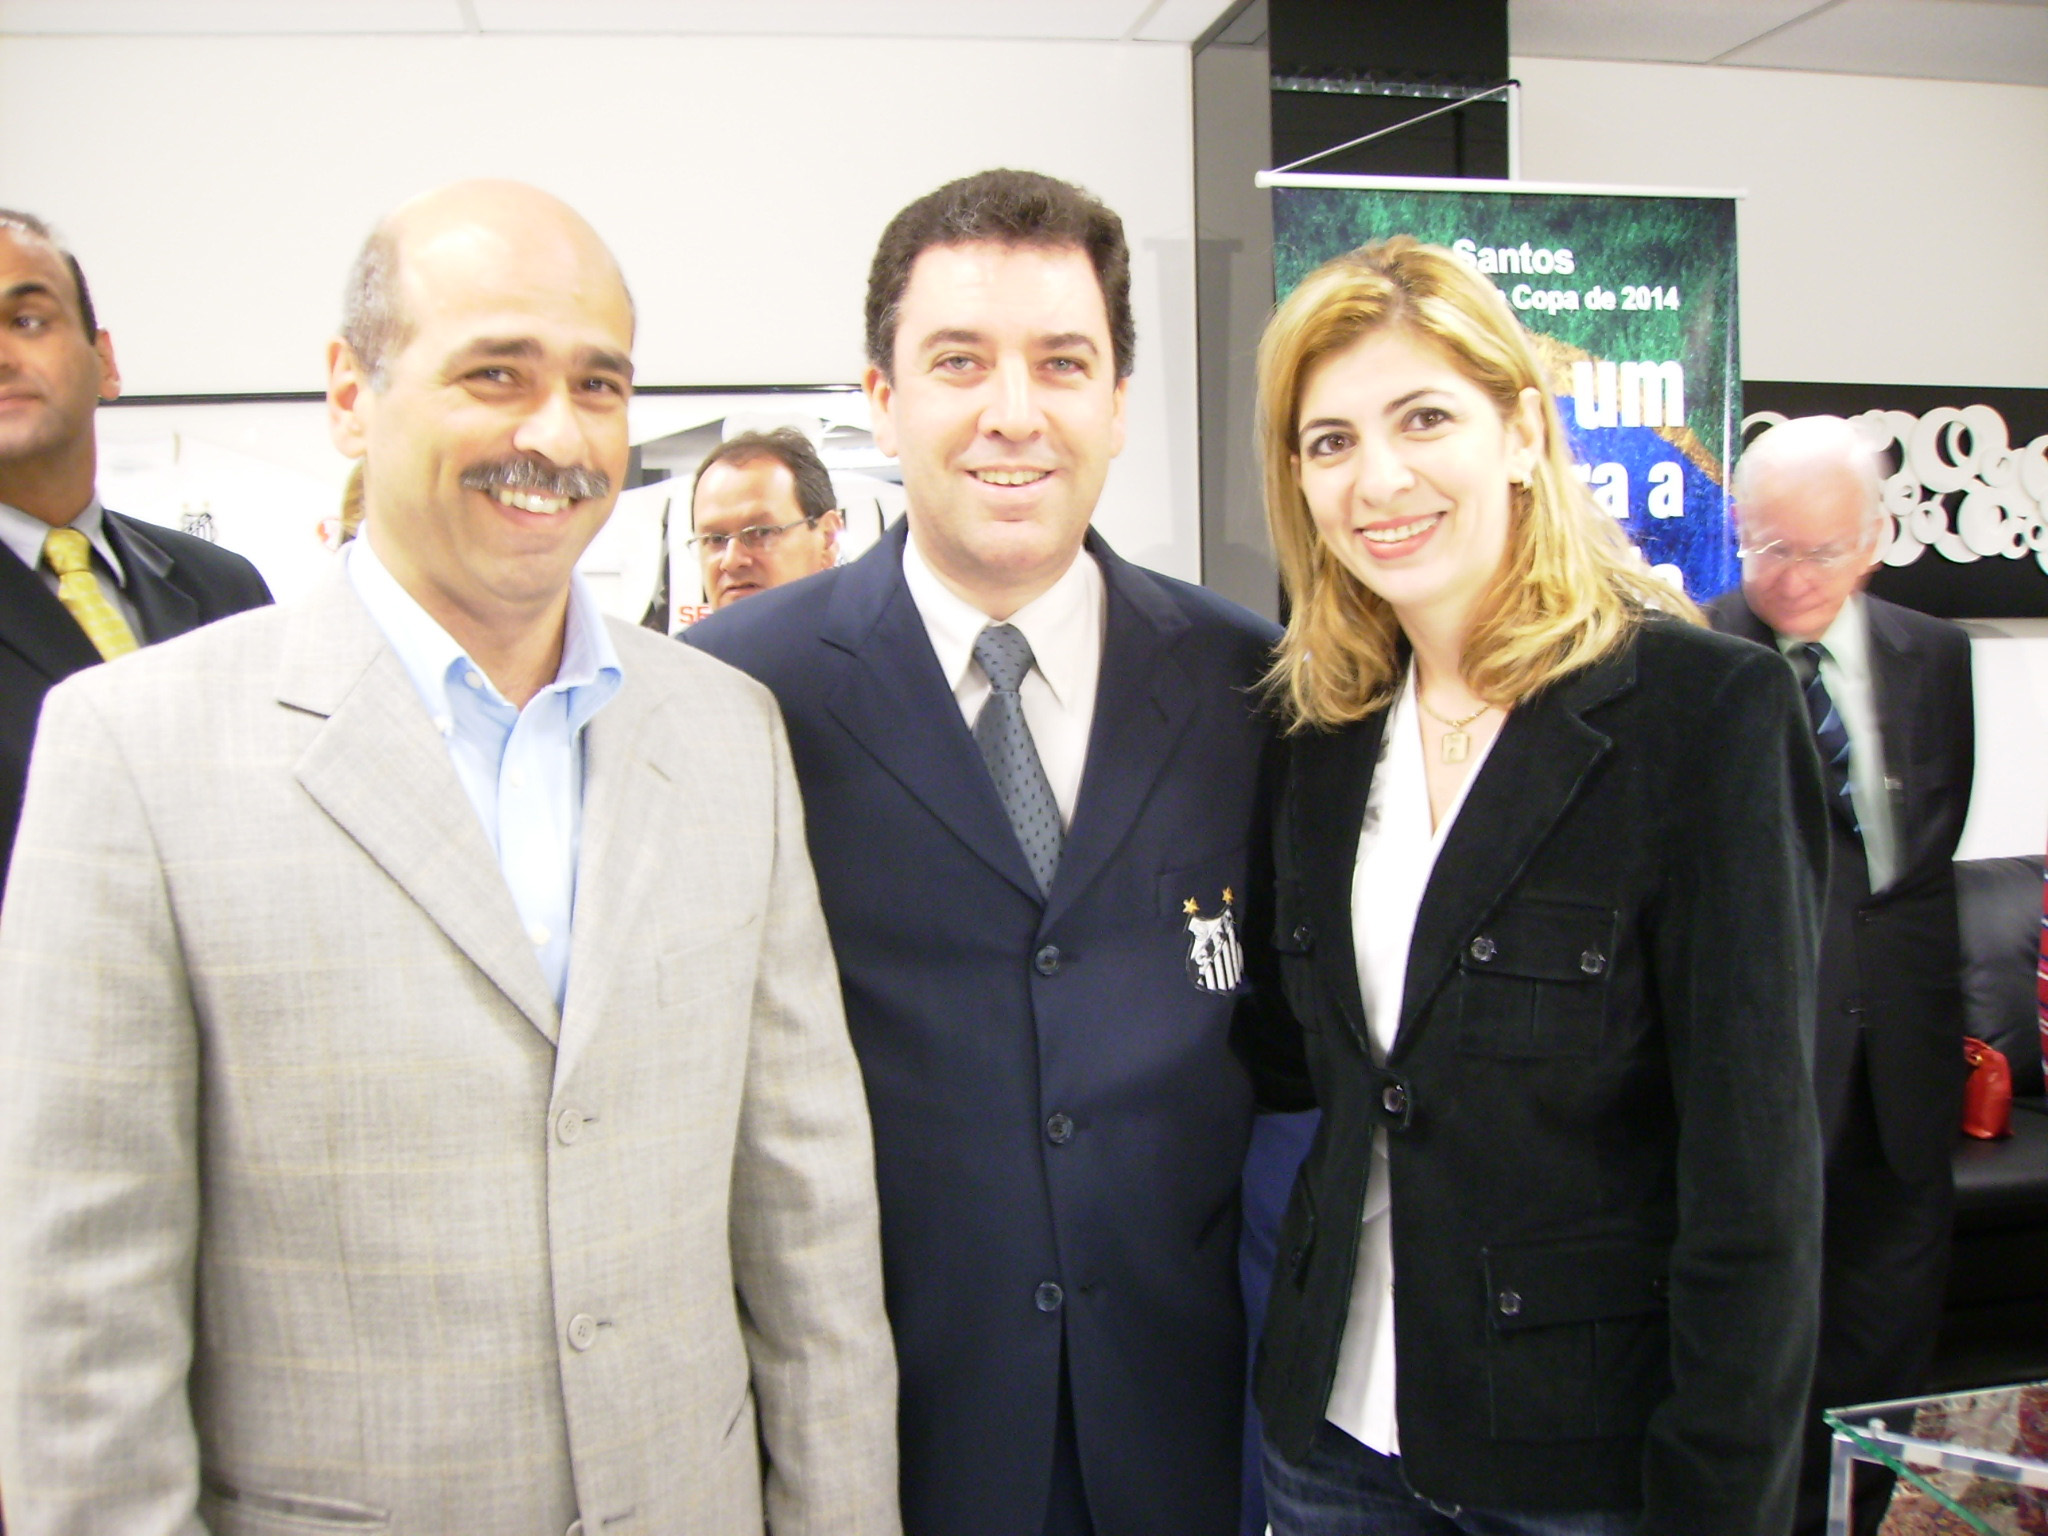 O prefeito de Guaruj, Farid Madi, o presidente do Santos F.C., Marcelo Teixeira, e a deputada Haifa Madi<a style='float:right;color:#ccc' href='https://www3.al.sp.gov.br/repositorio/noticia/03-2008/HAIFA COPA 2014.jpg' target=_blank><i class='bi bi-zoom-in'></i> Clique para ver a imagem </a>